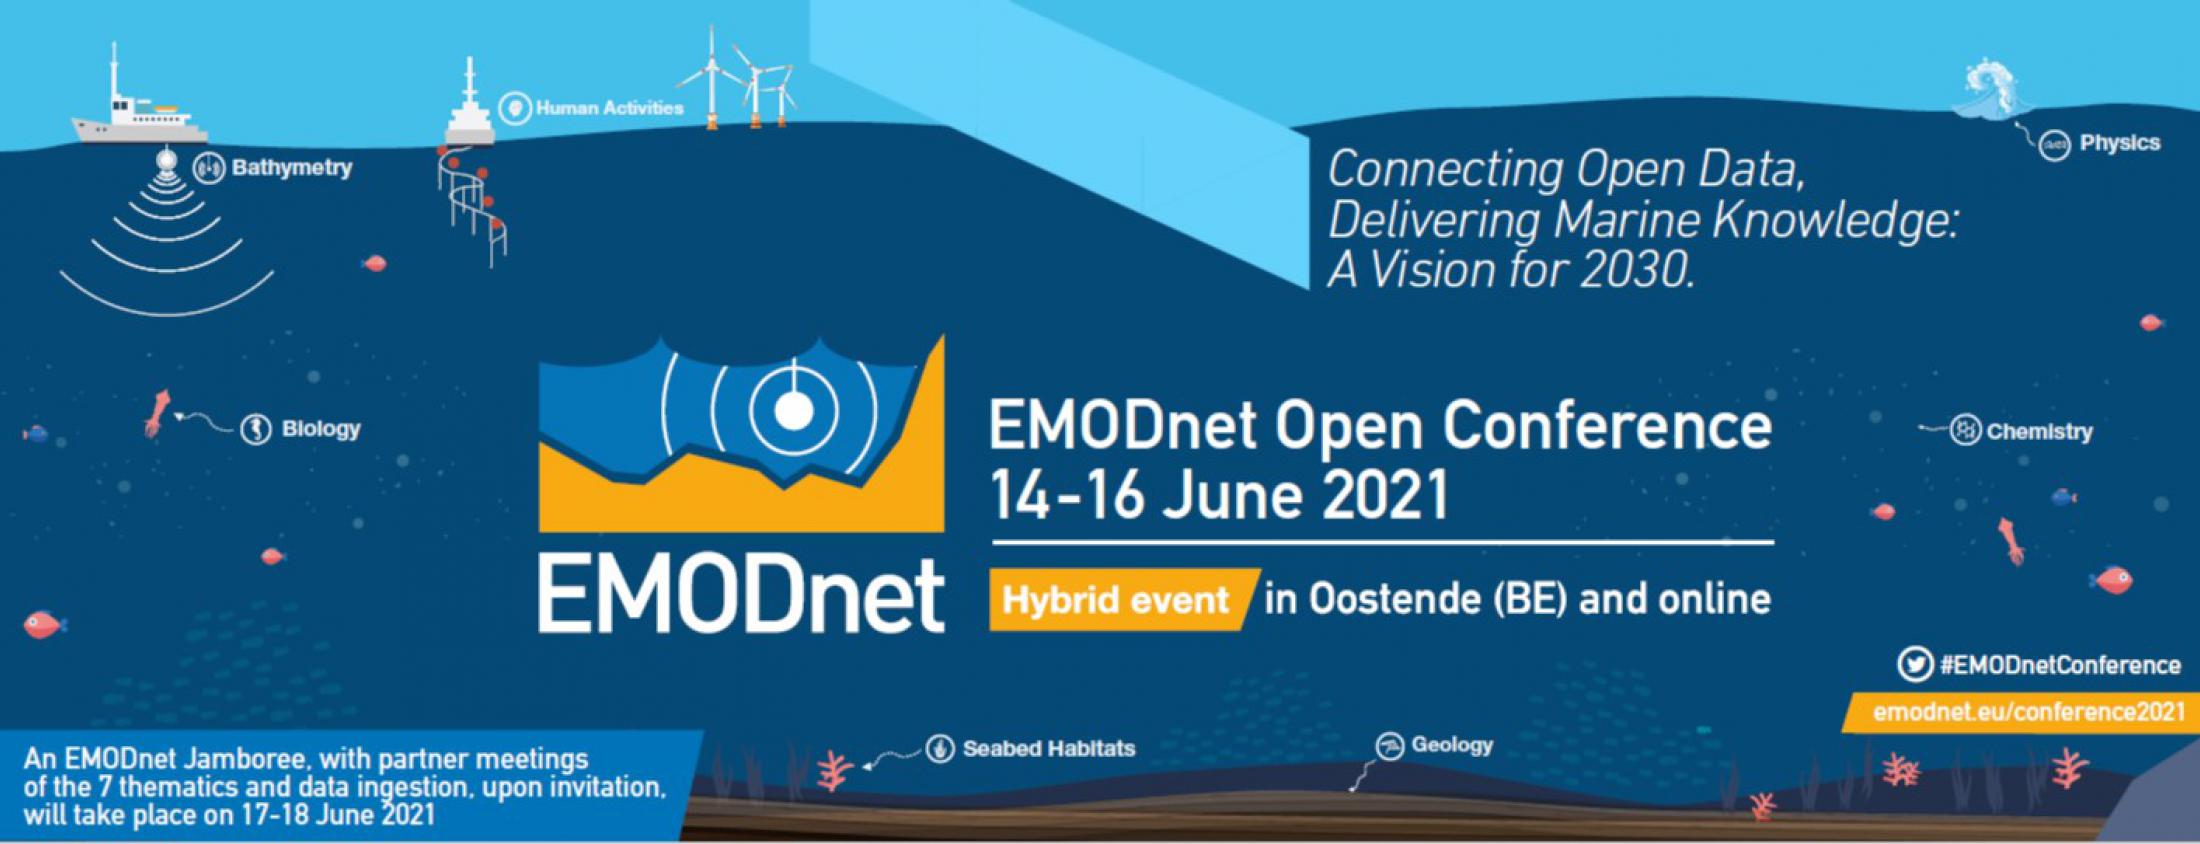 EMODnet Open Conference and Jamboree 2021 - ONLINE event